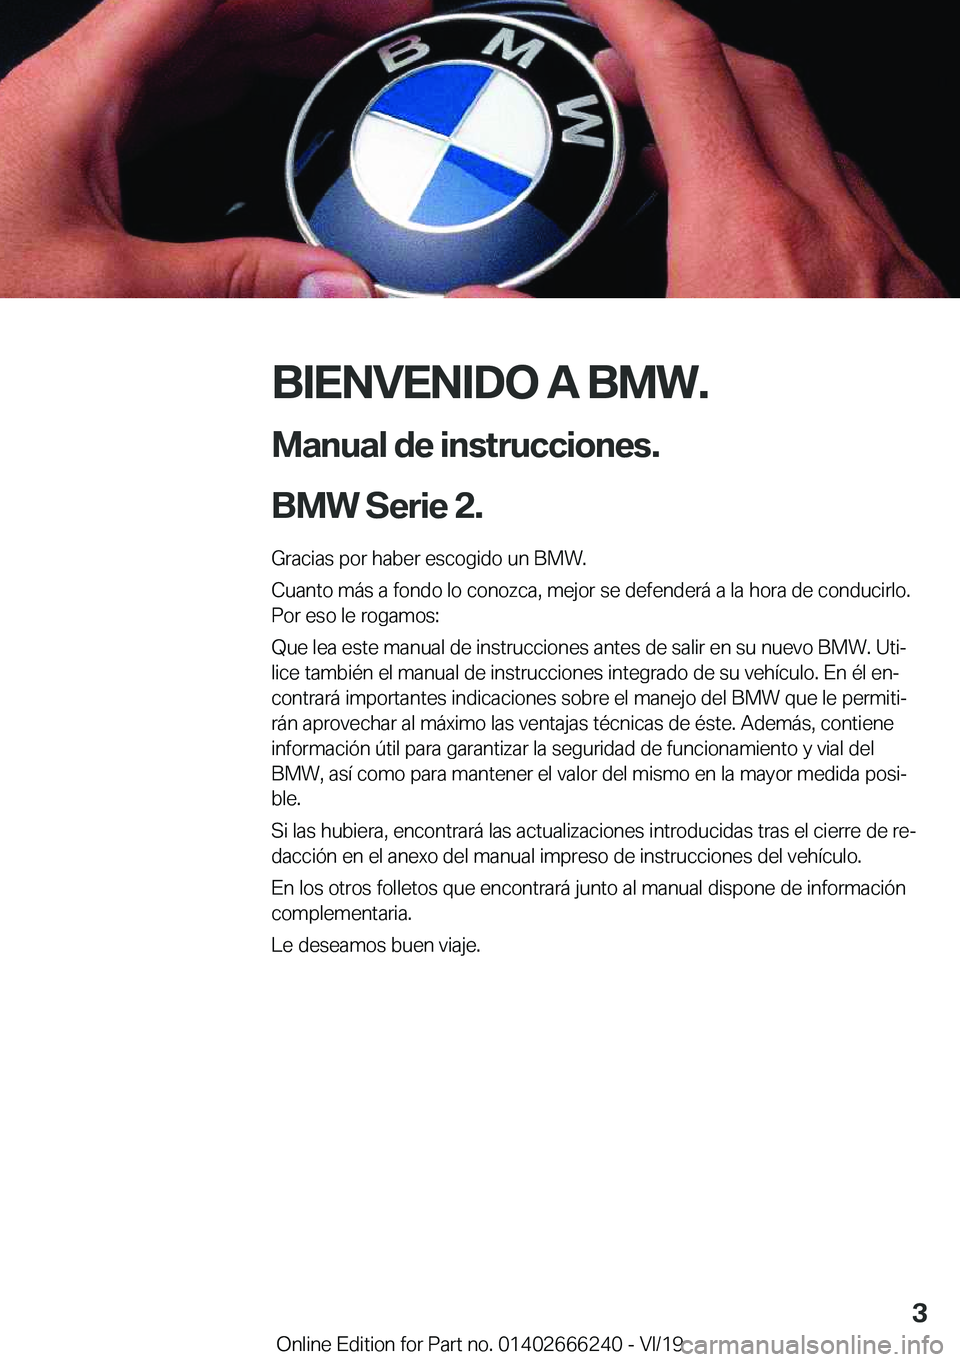 BMW 2 SERIES COUPE 2020  Manuales de Empleo (in Spanish) �B�I�E�N�V�E�N�I�D�O��A��B�M�W�.
�M�a�n�u�a�l��d�e��i�n�s�t�r�u�c�c�i�o�n�e�s�.
�B�M�W��S�e�r�i�e��2�.� �G�r�a�c�i�a�s��p�o�r��h�a�b�e�r��e�s�c�o�g�i�d�o��u�n��B�M�W�.
�C�u�a�n�t�o��m�